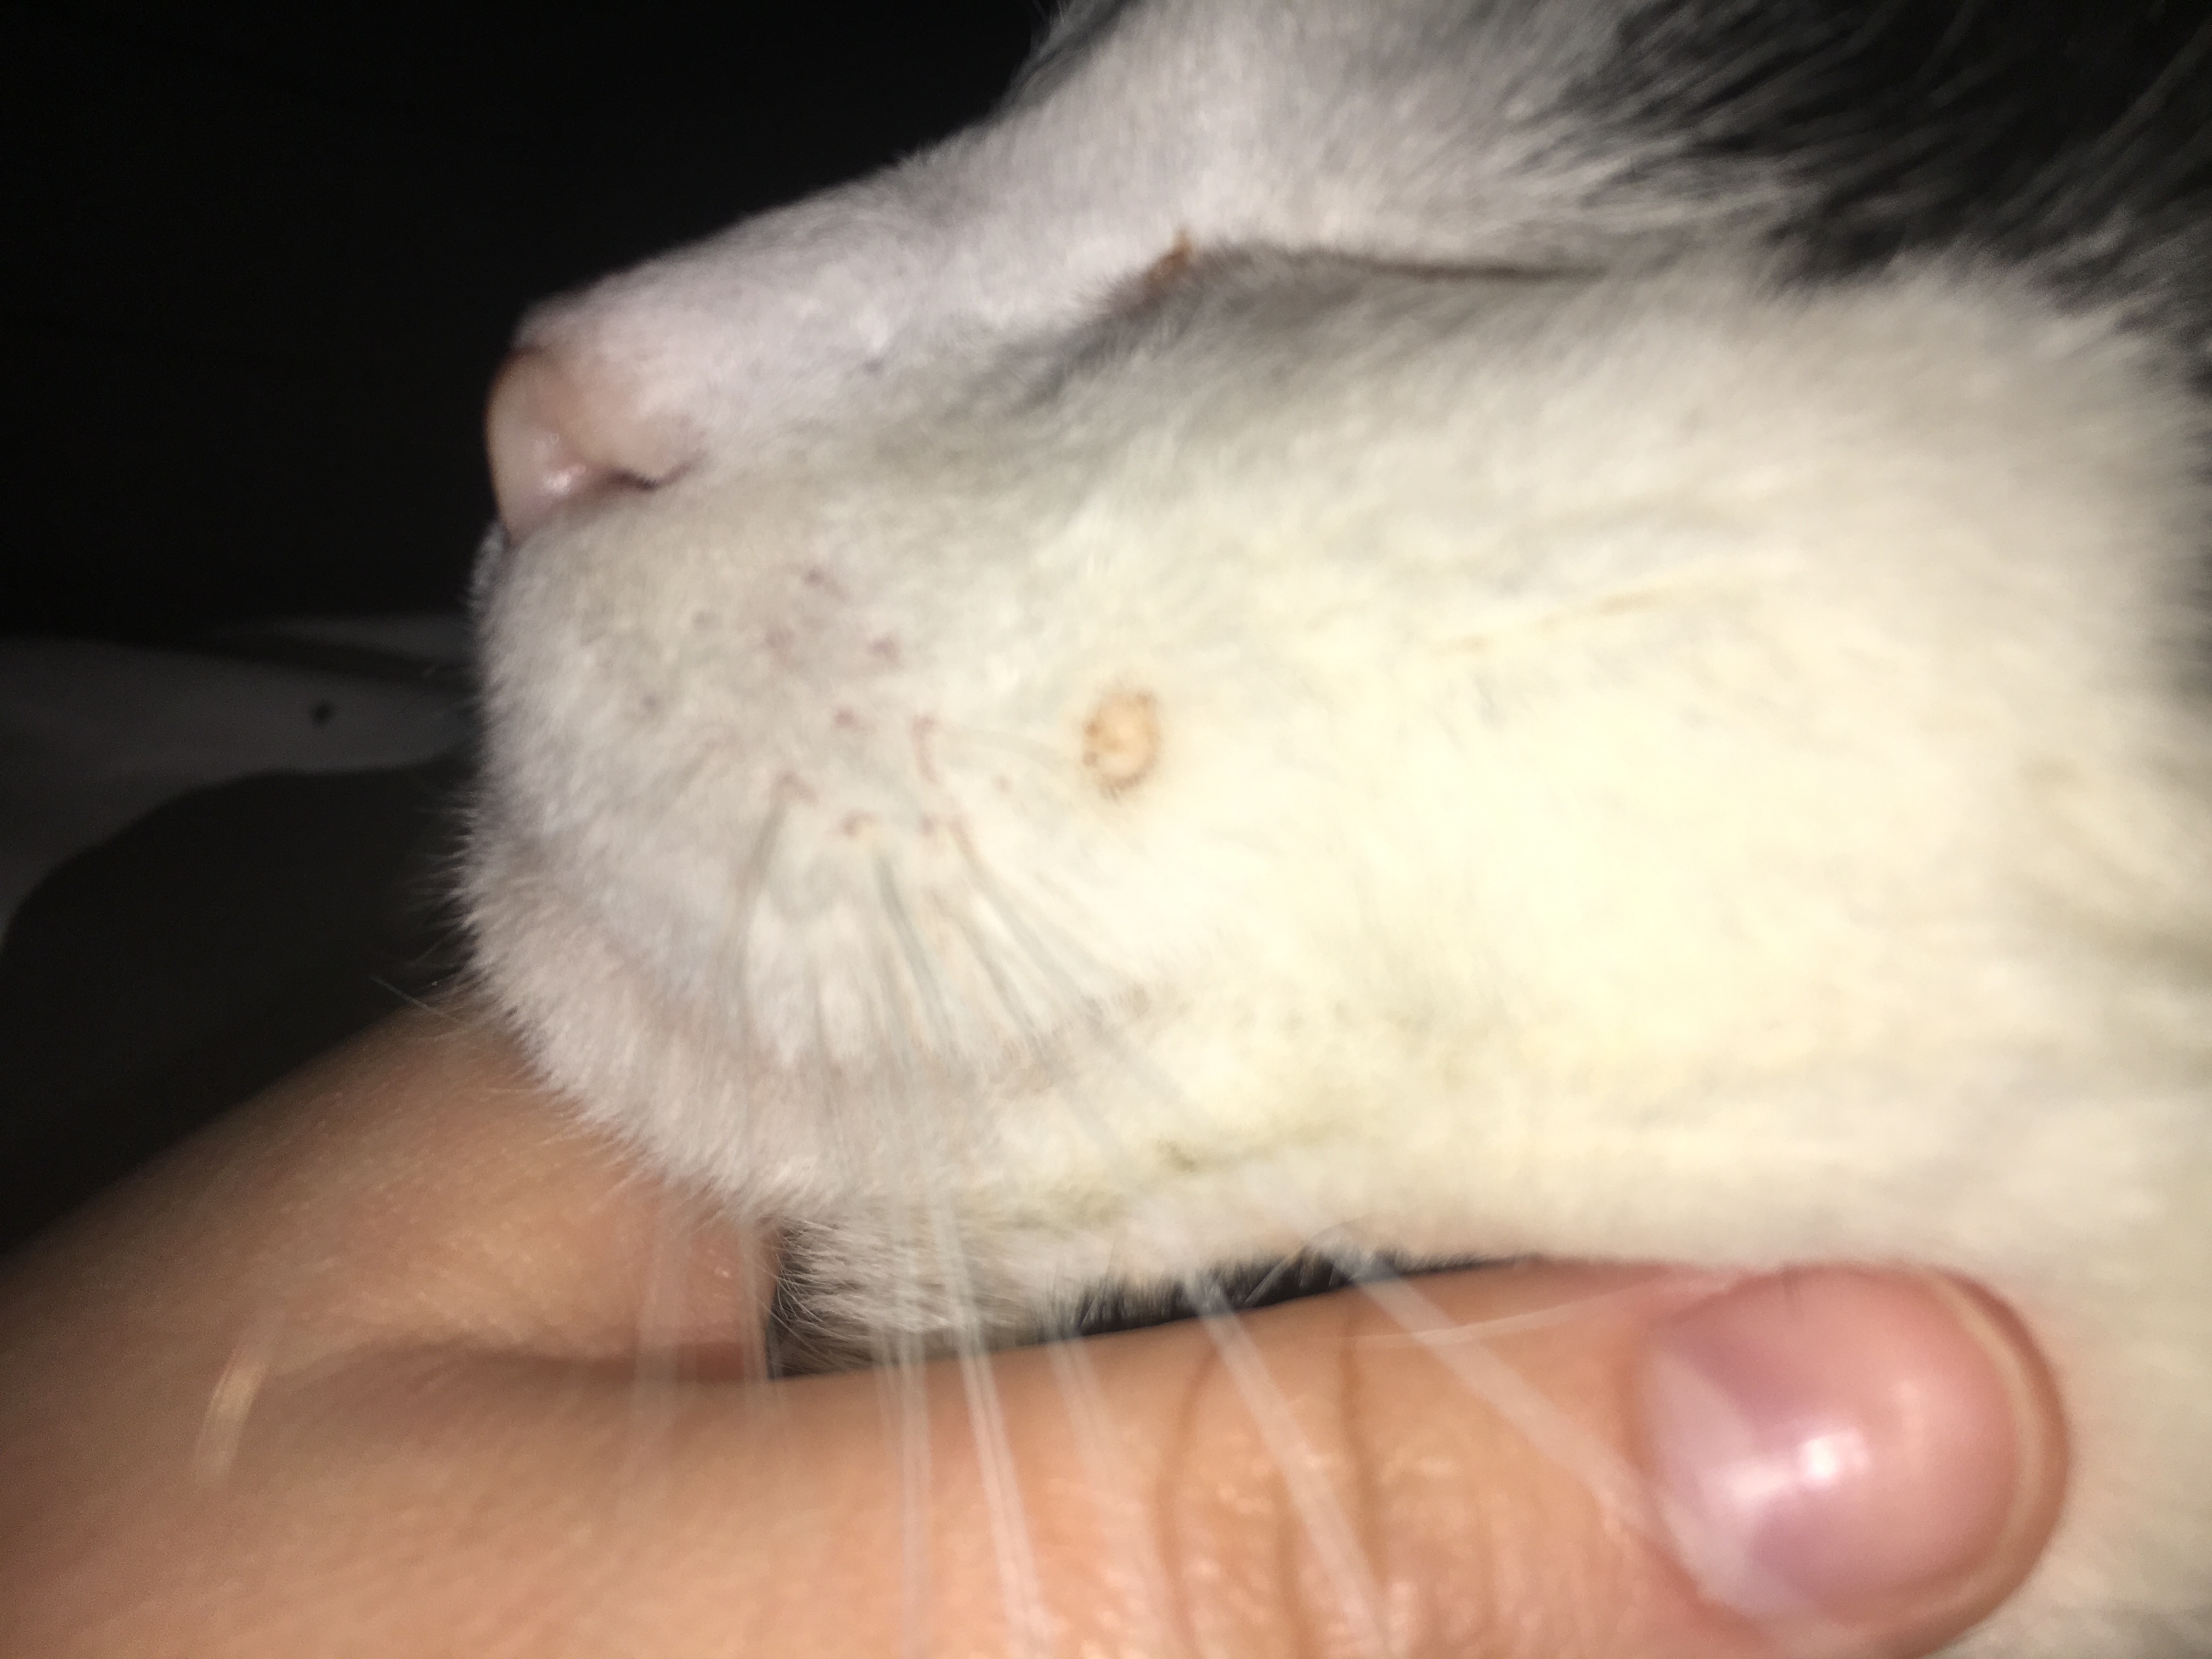 Cat Bumps On Skin toxoplasmosis